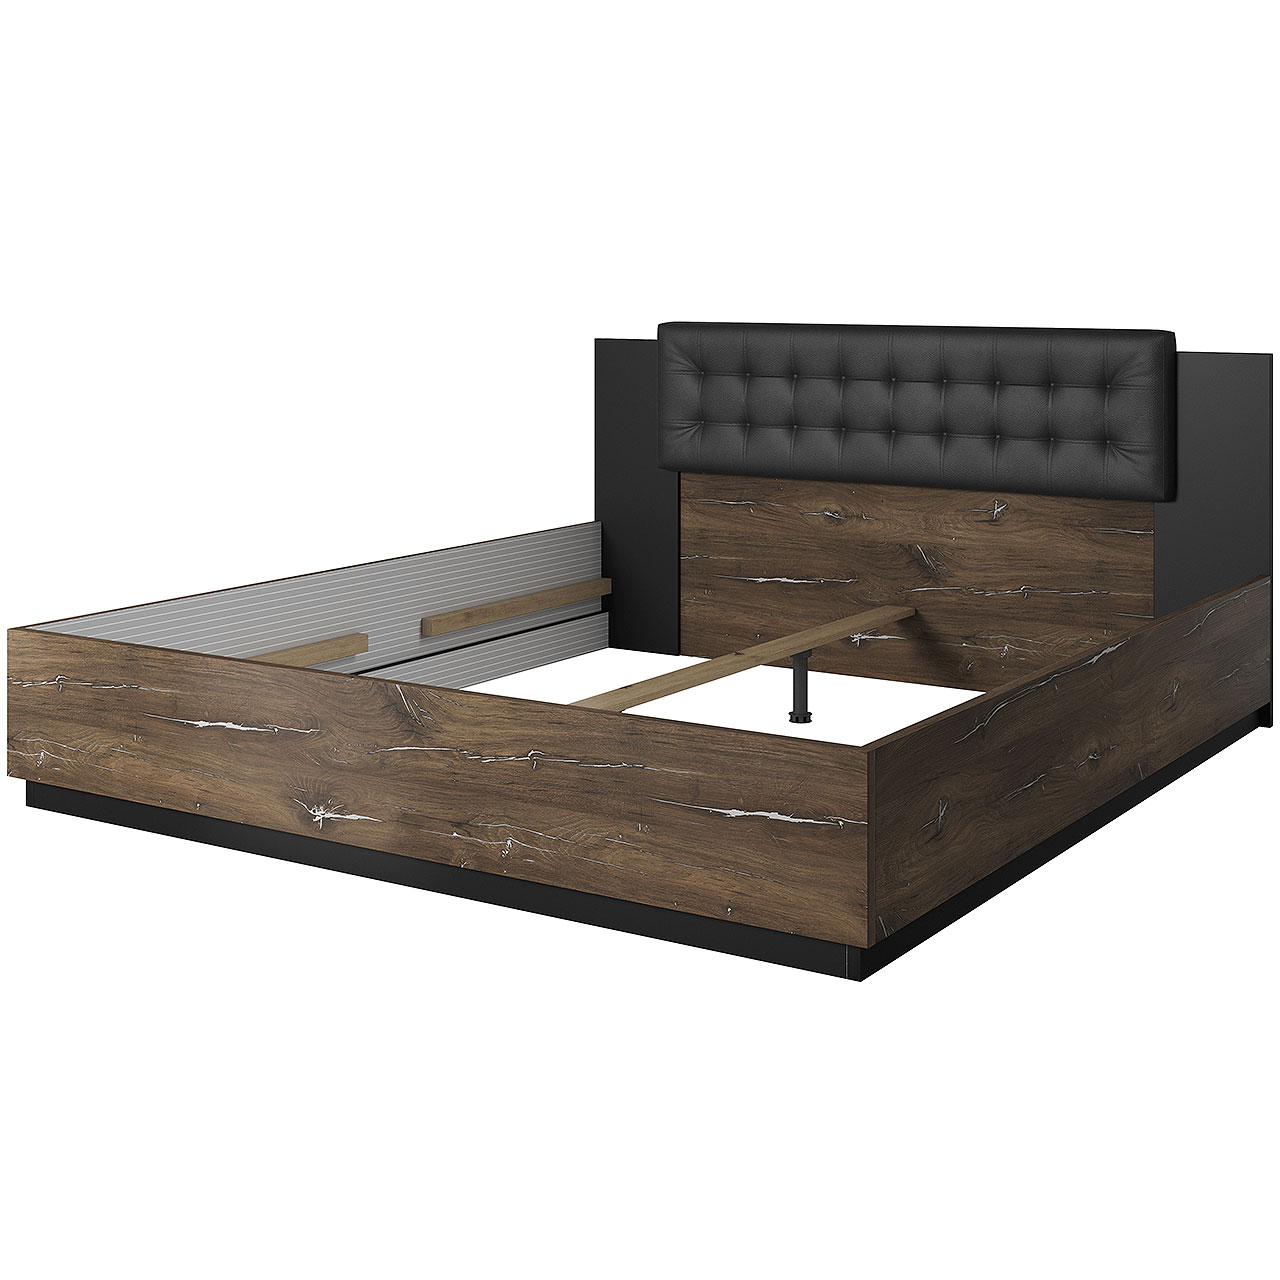 Bed 140x200 SIGMA SG30 oak flagstaf steel / black